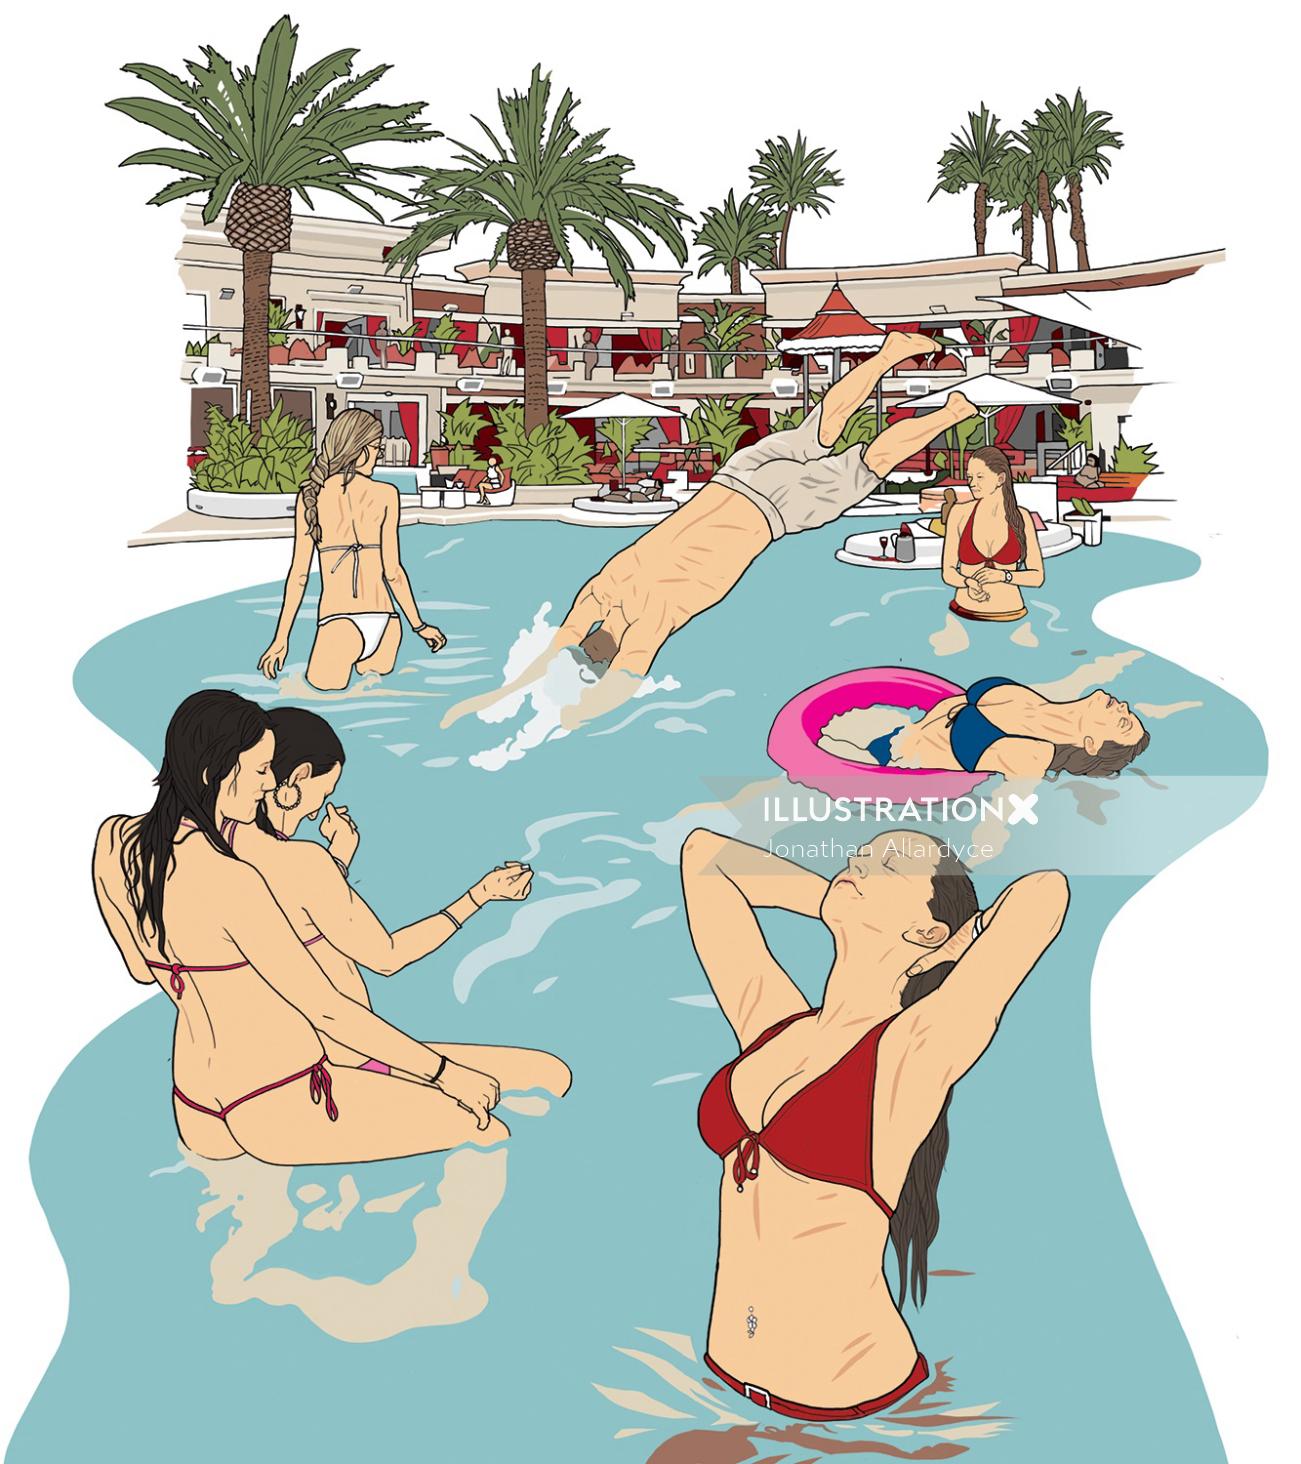 Swimming pool in resort with beautiful girls and men - illustration by Jonathan Allardyce